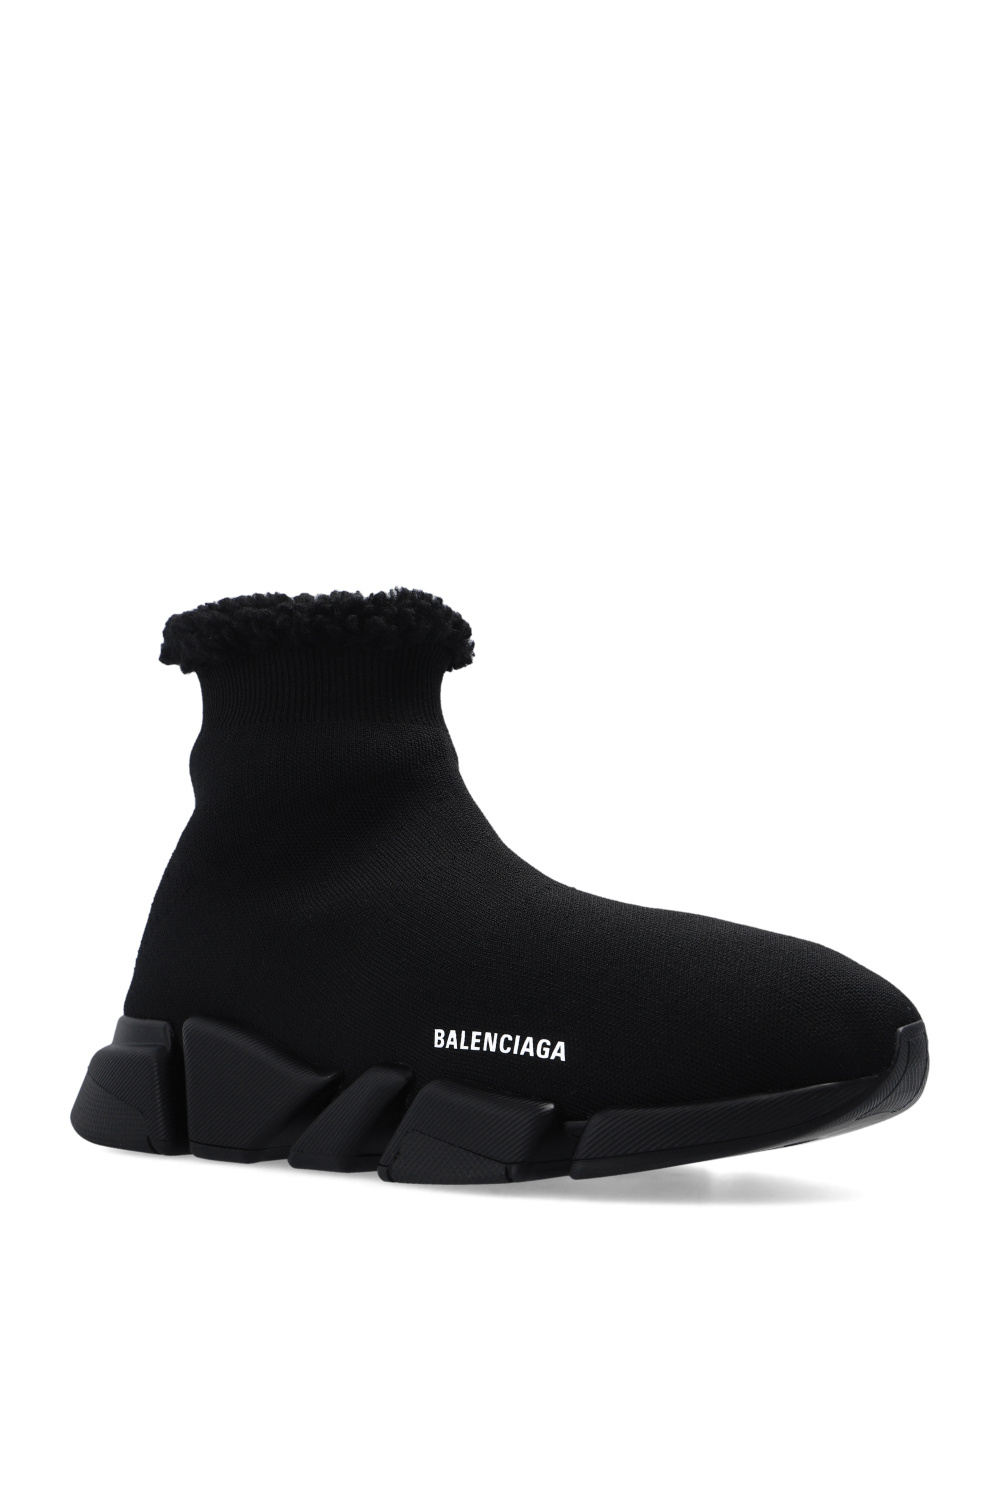 techo híbrido preámbulo IetpShops Lebanon - zapatillas de running Merrell merrell talla 37.5 negras  - 'Speed 2.0 LT' sock sneakers Balenciaga